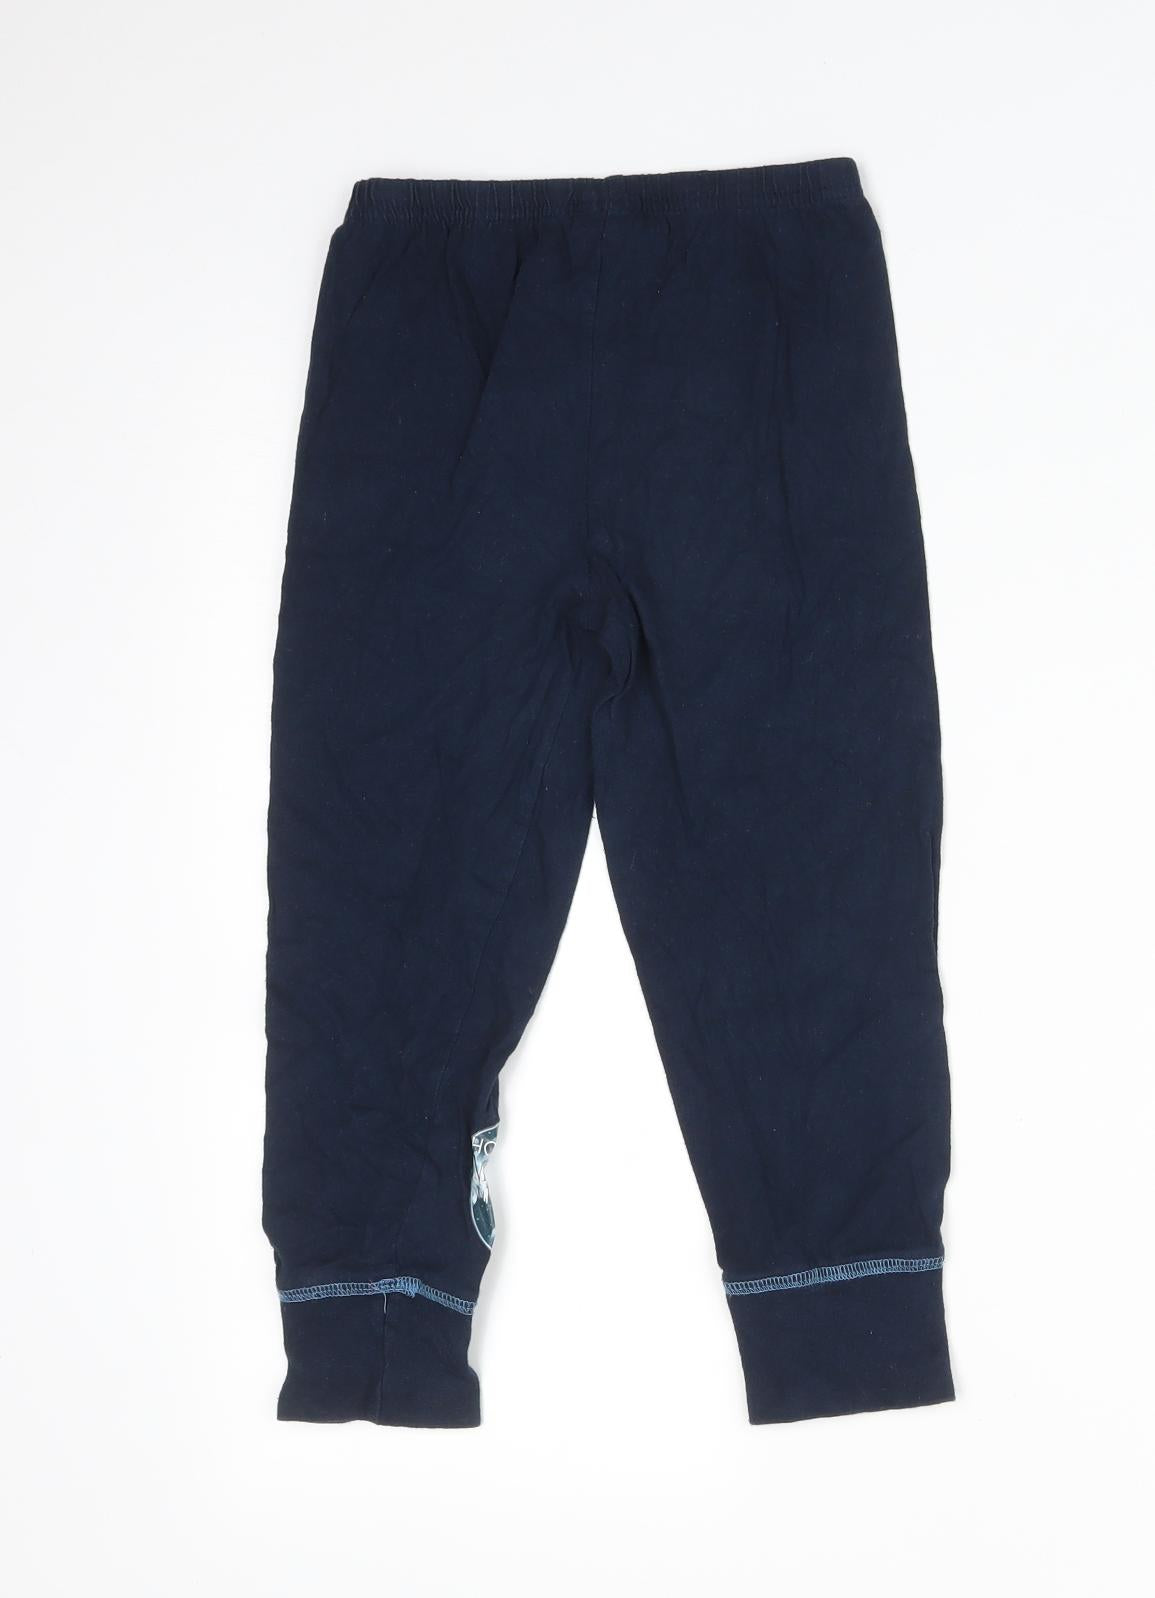 Harry Potter Girls Blue Solid Cotton  Pyjama Pants Size 7-8 Years   - HOGWARTS MAGIC